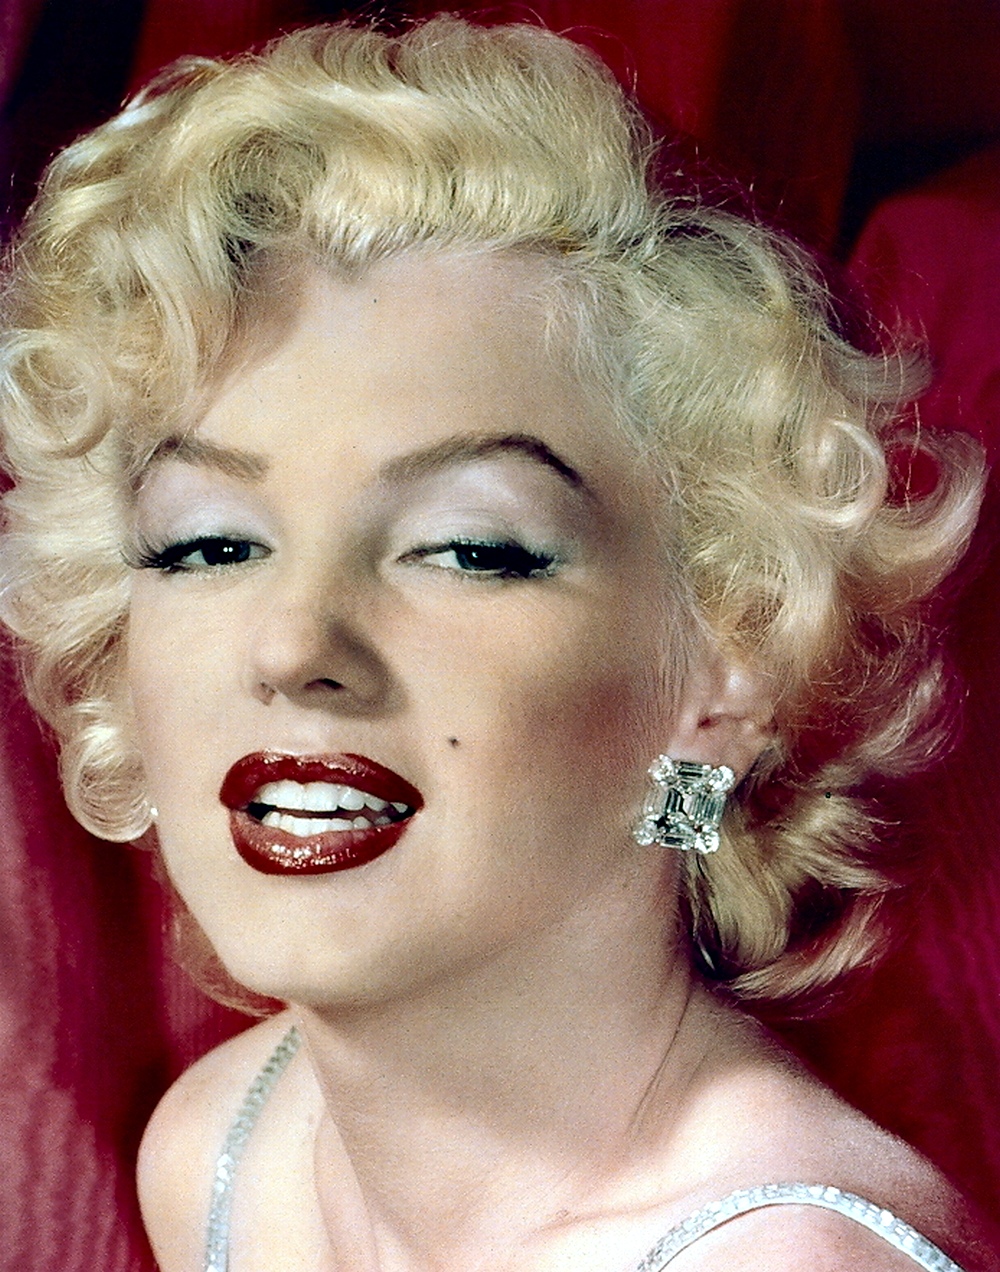 Marilyn Monroe photo 443 of 2214 pics, wallpaper - photo #160984 ...